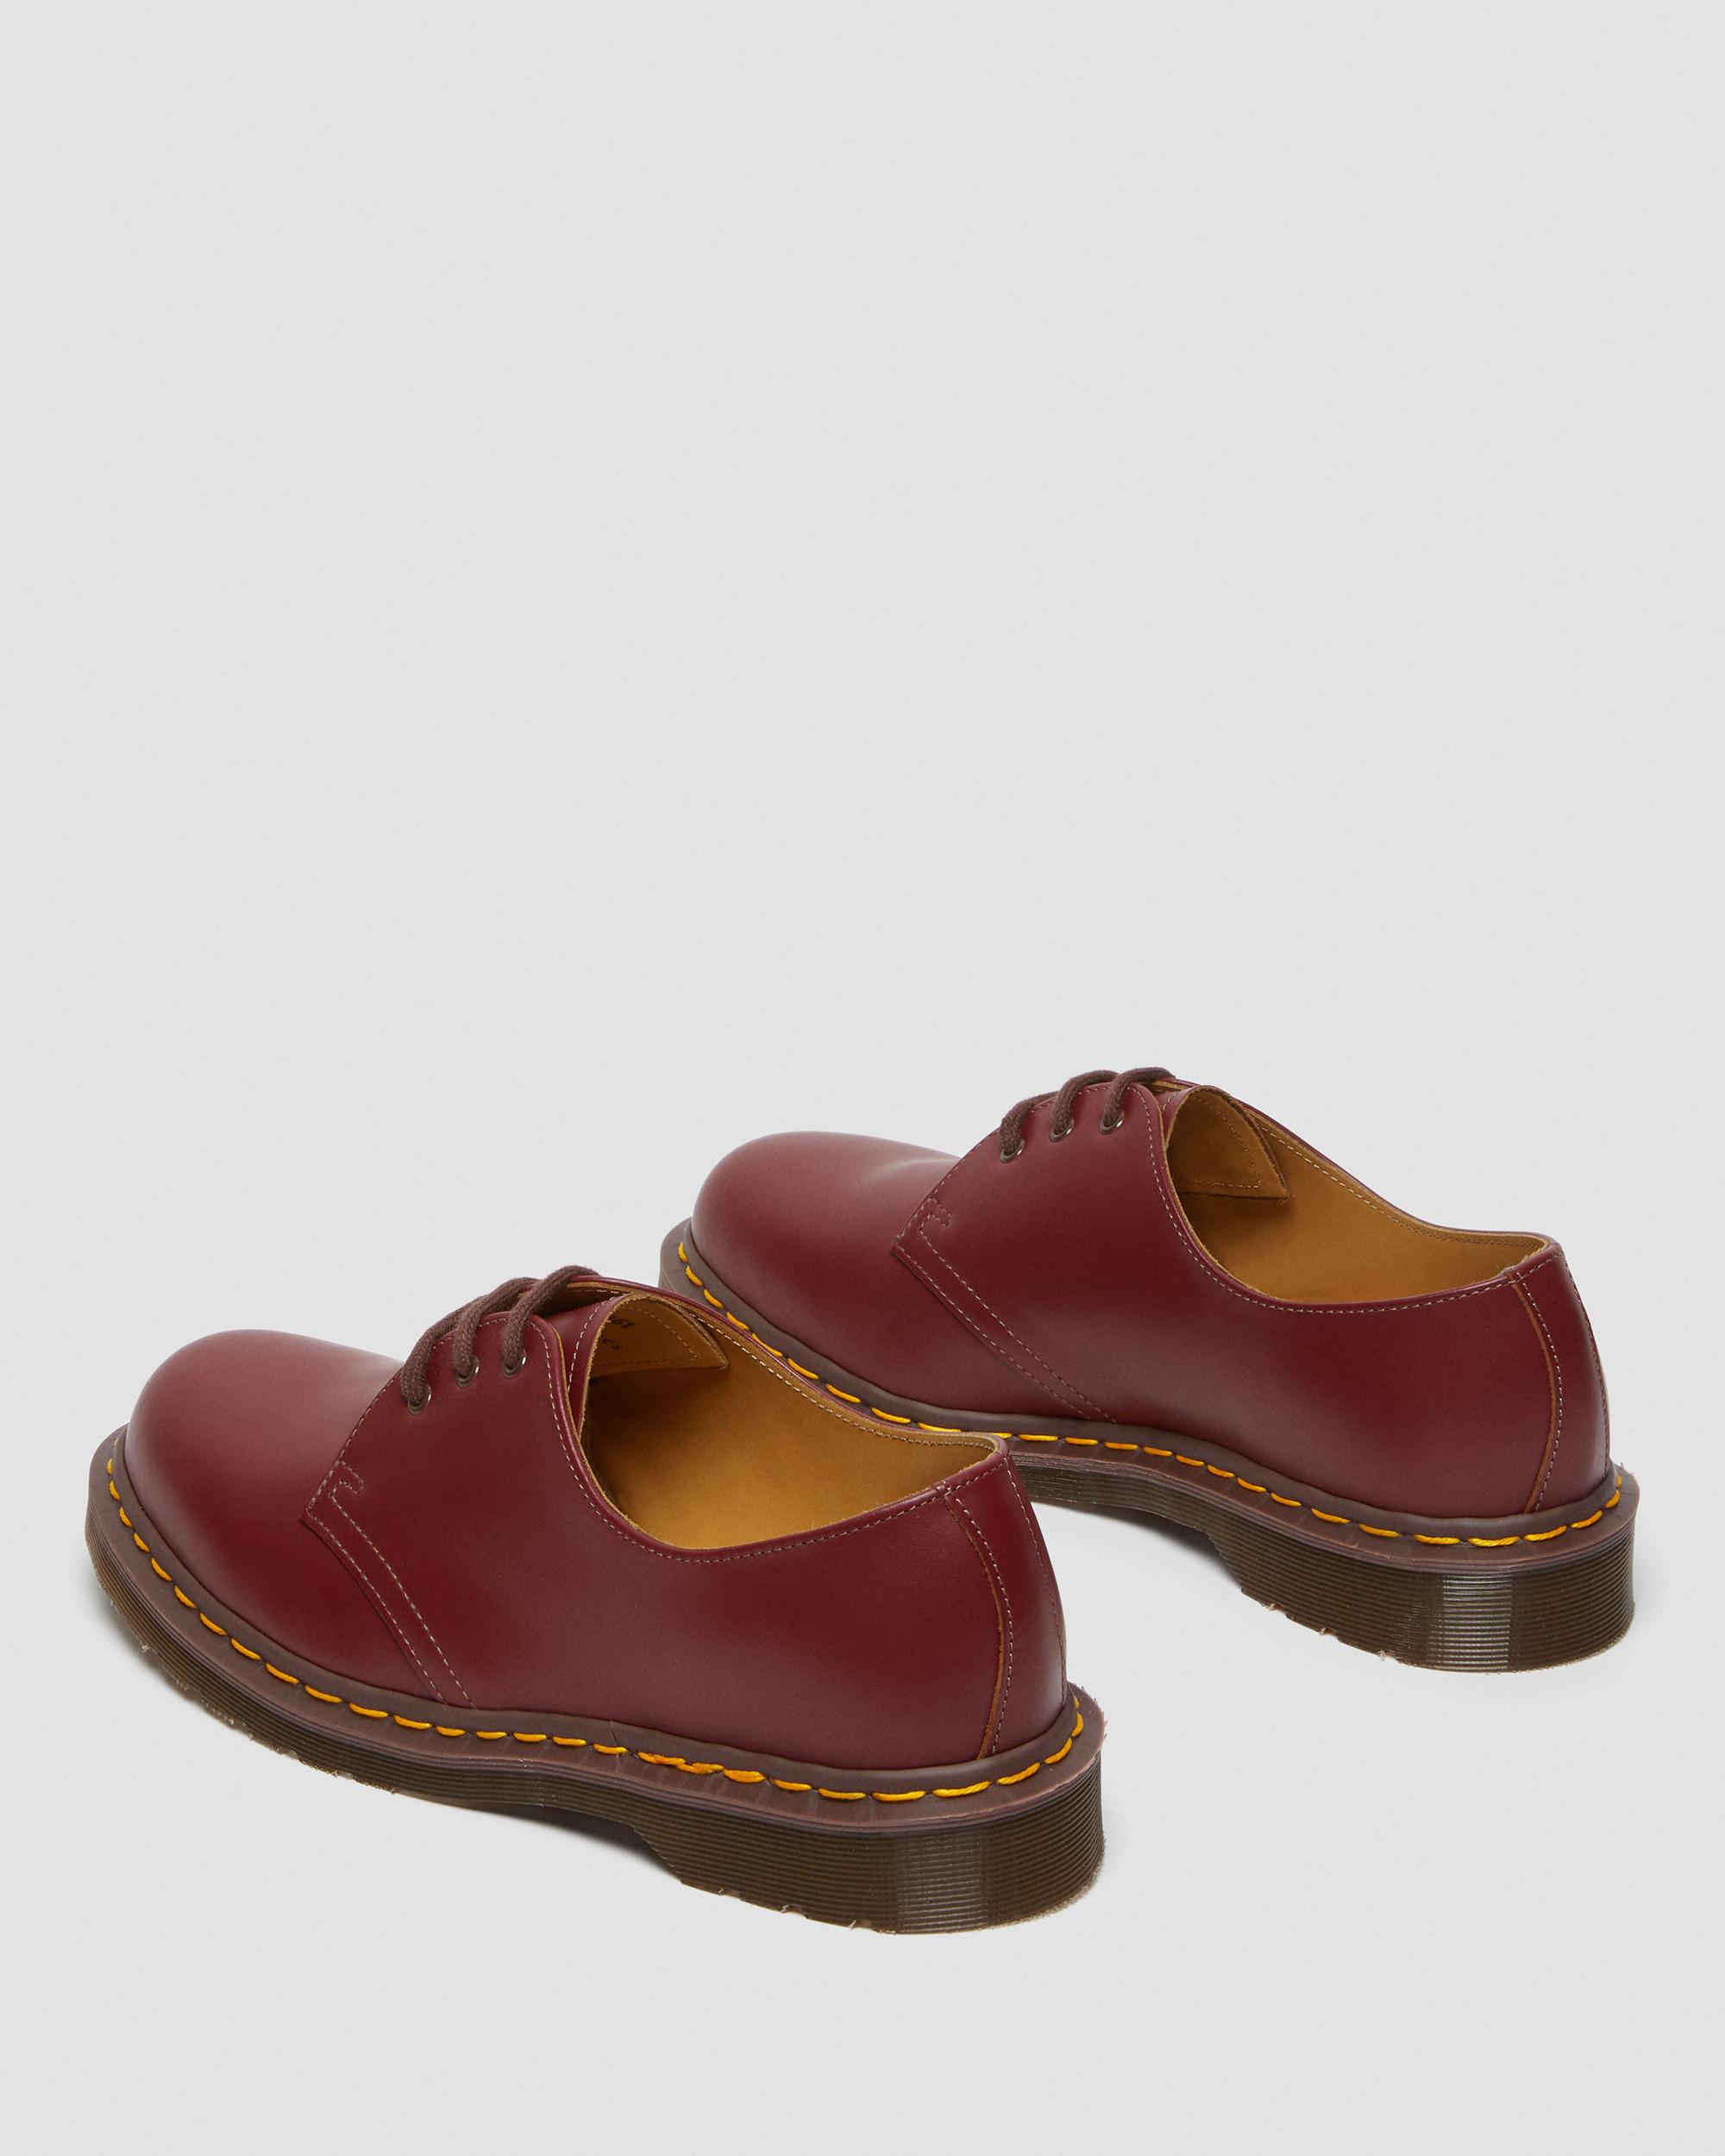 VINTAGE 1461 DARK REDVintage 1461 Quilon Leather Oxford Shoes Dr. Martens